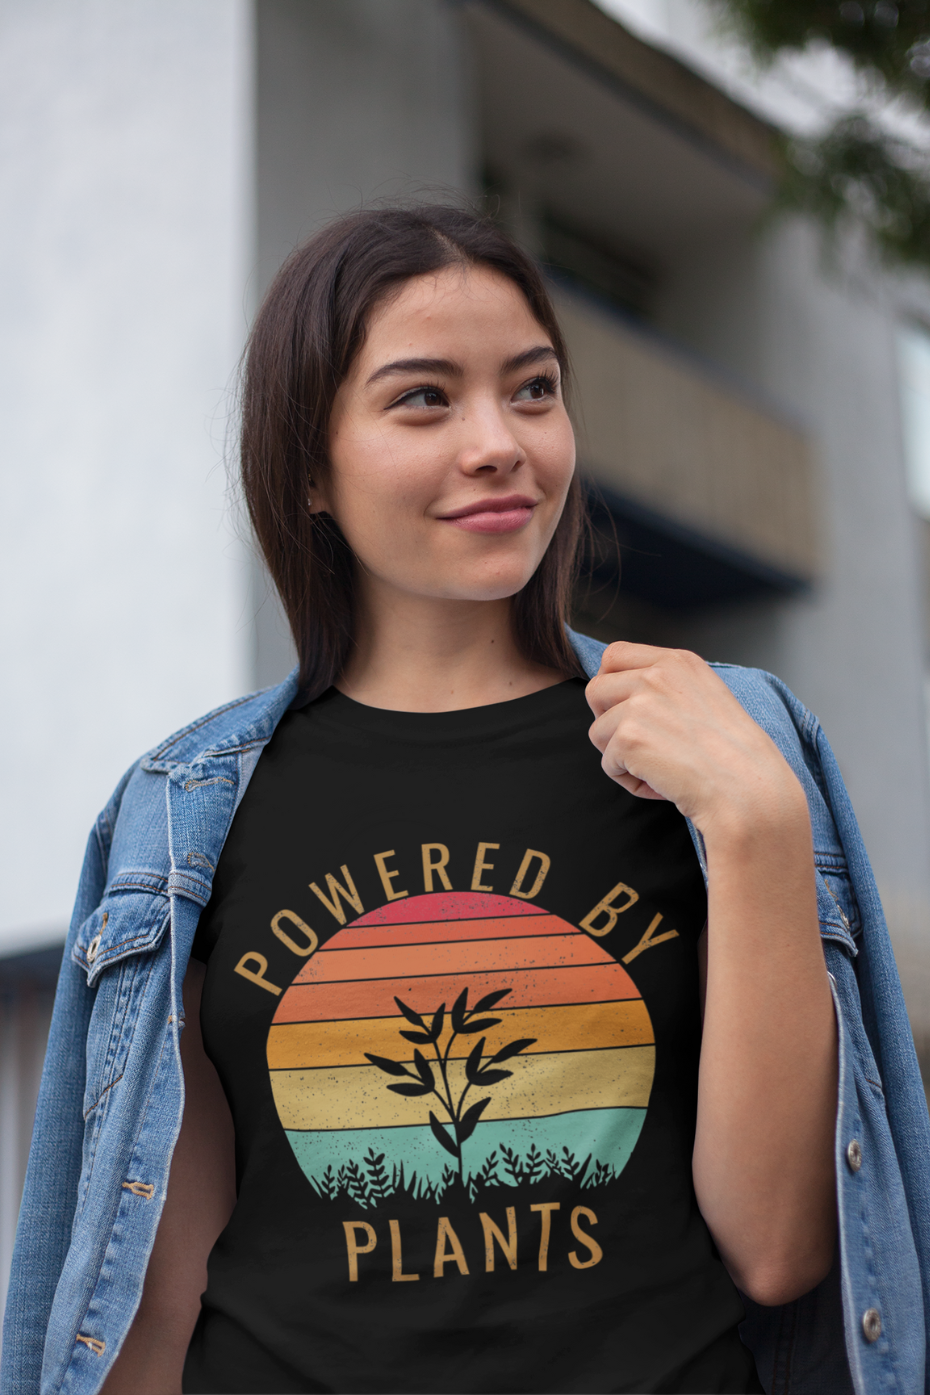 Powered By Plants Unisex Basic Softstyle T-Shirt